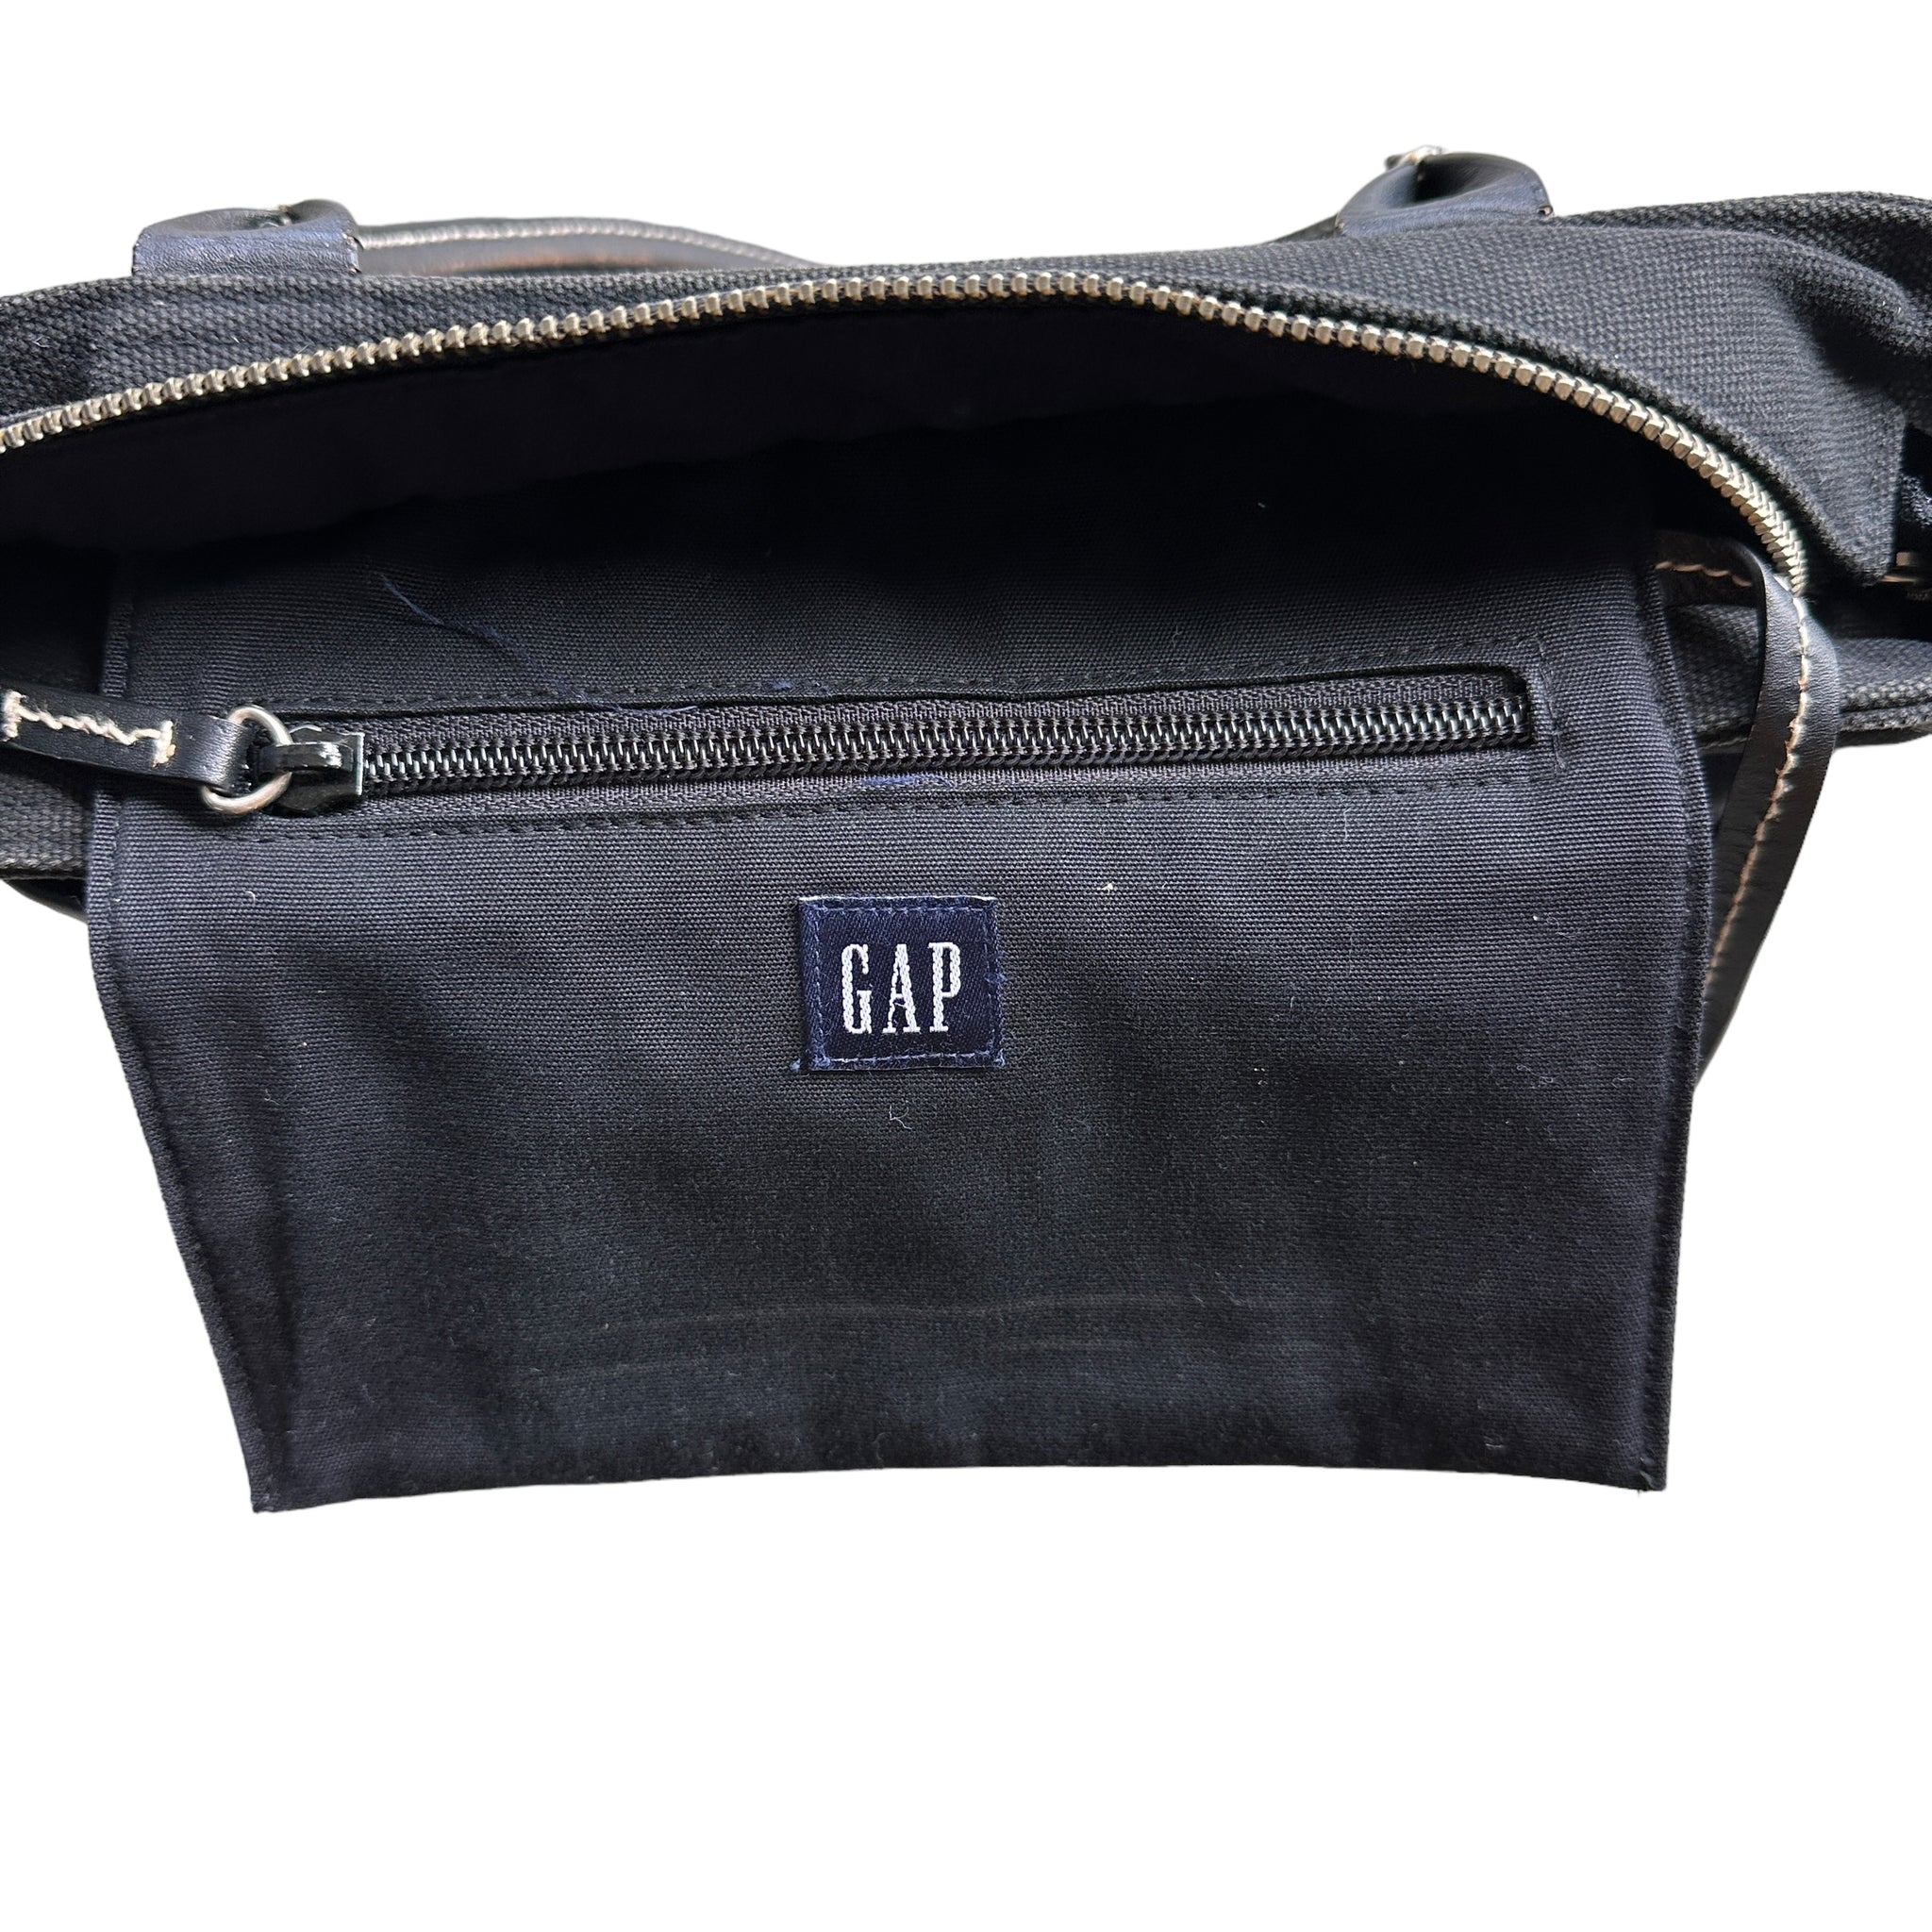 2003 Gap purse